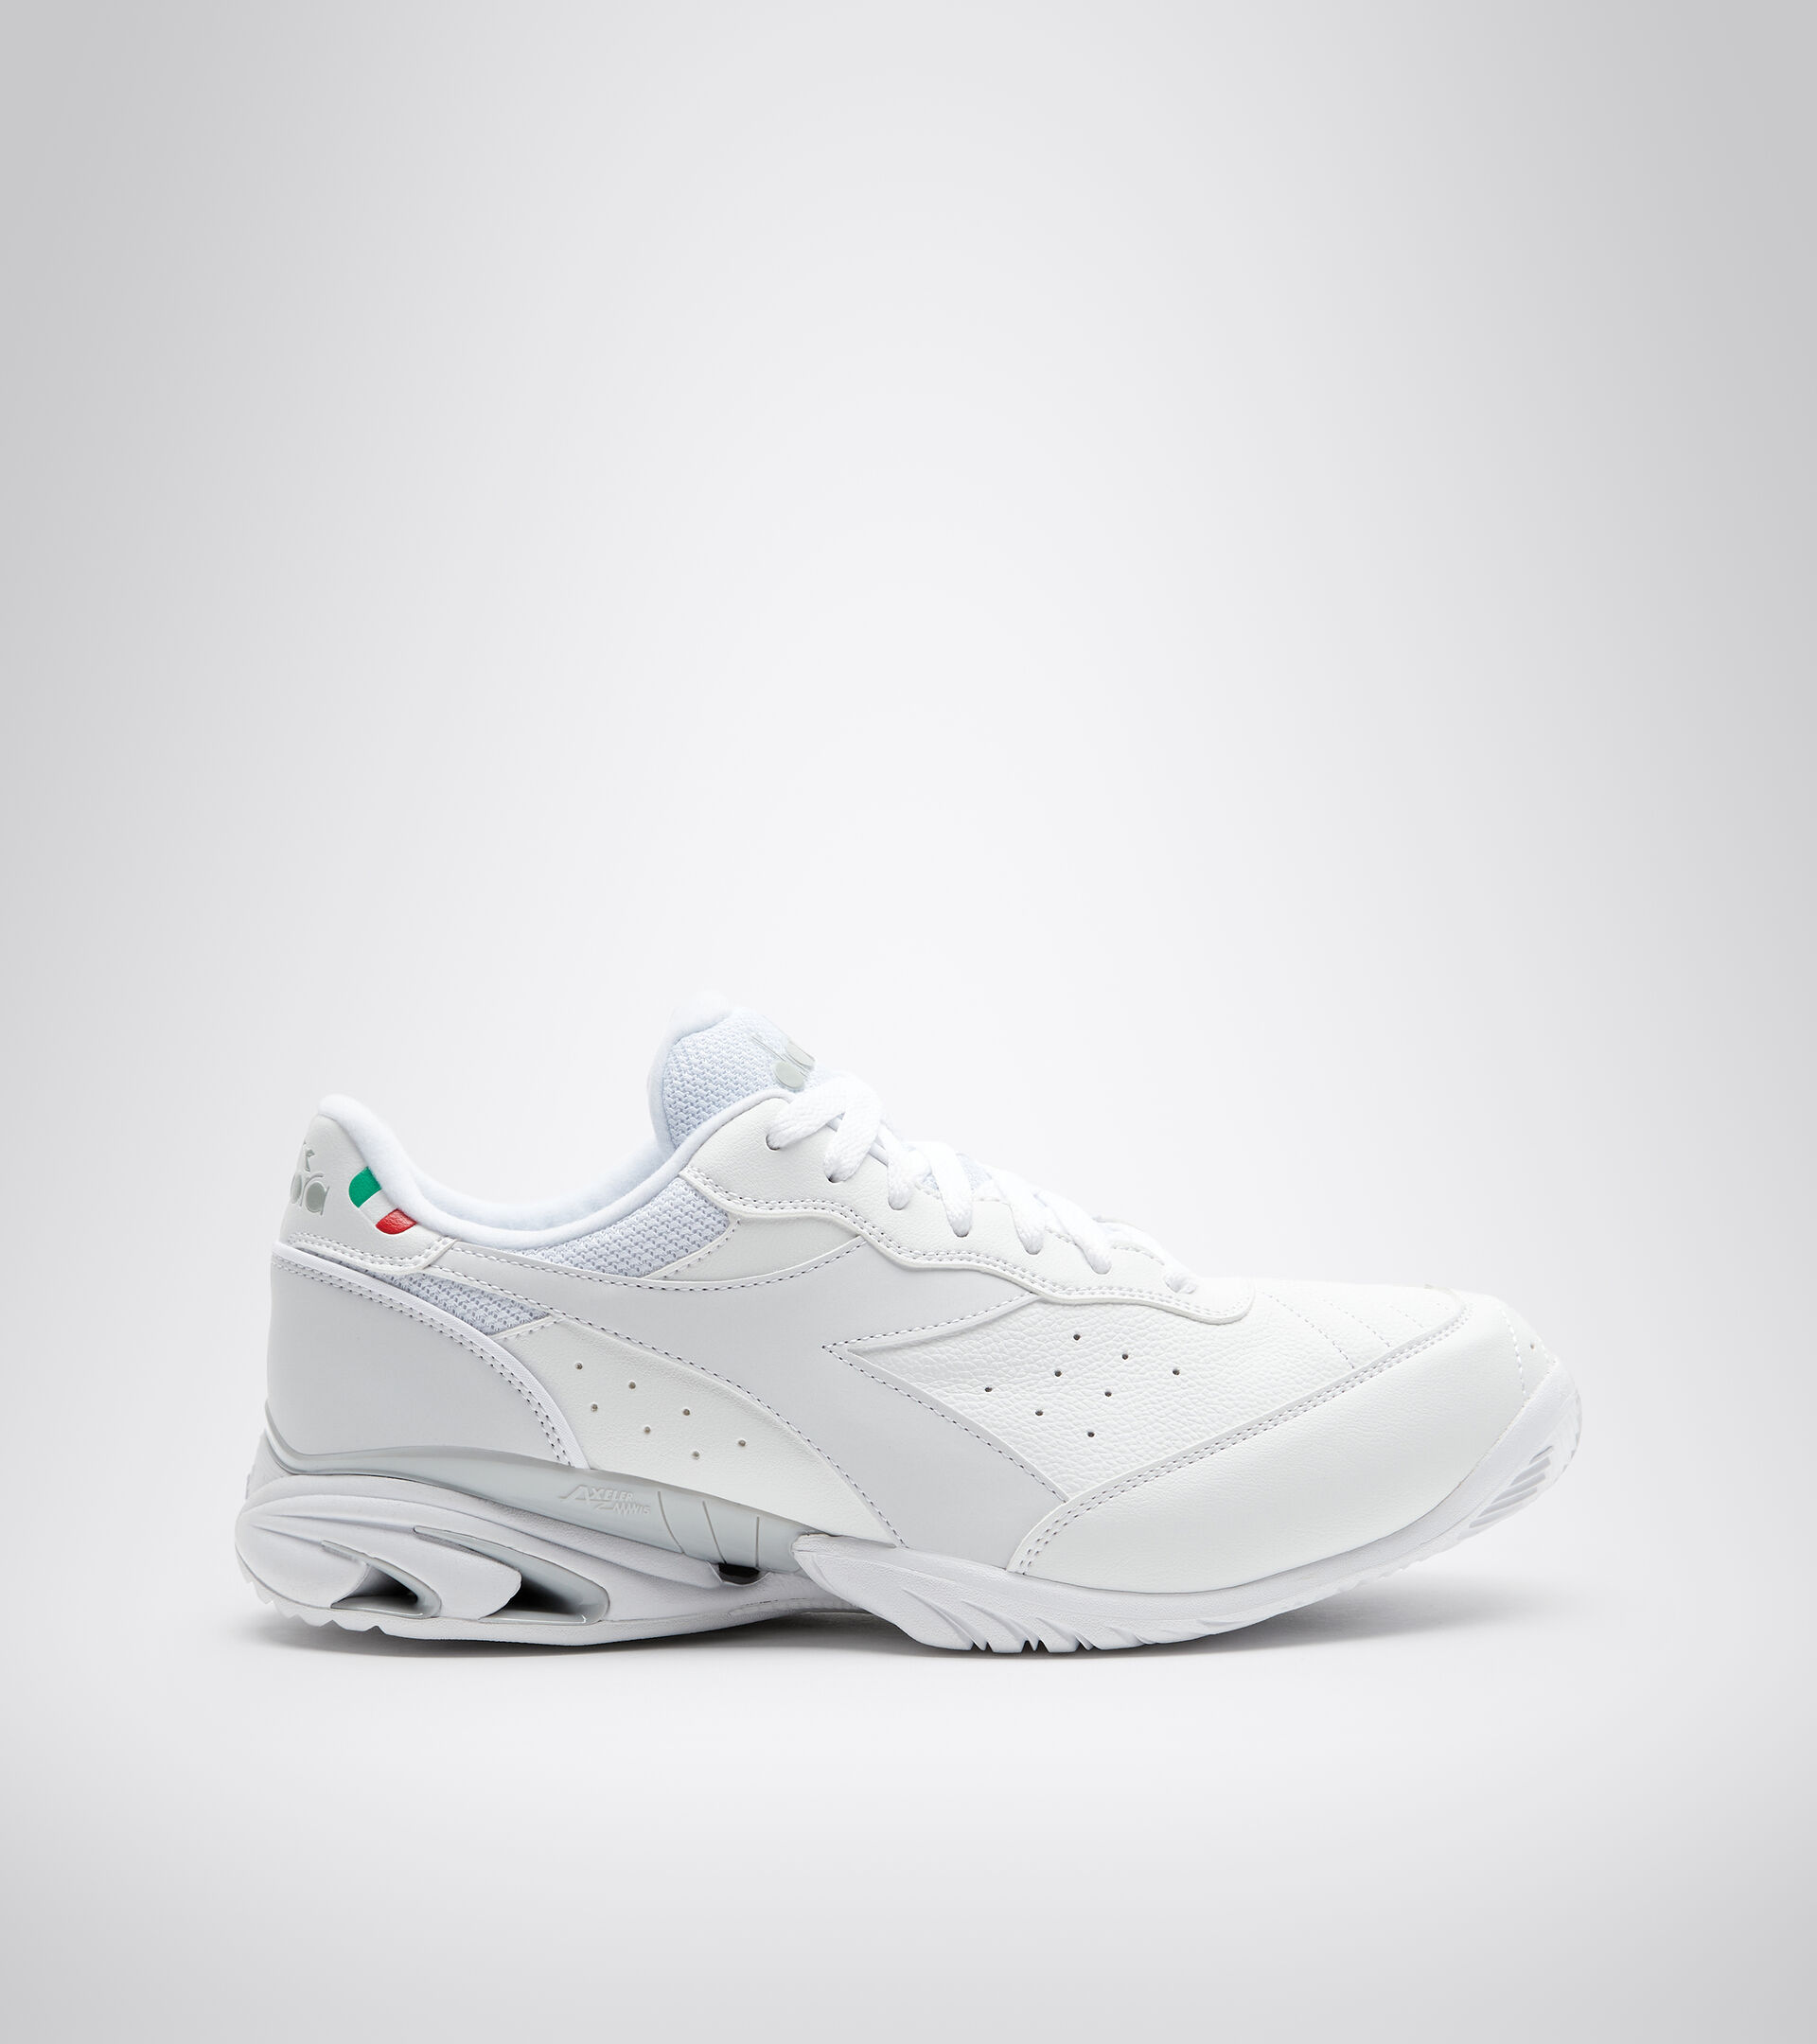 Tennis shoes for hard surfaces and/or clay - Men's S.STAR MAVERICK AG WHITE/WHITE/WHITE - Diadora